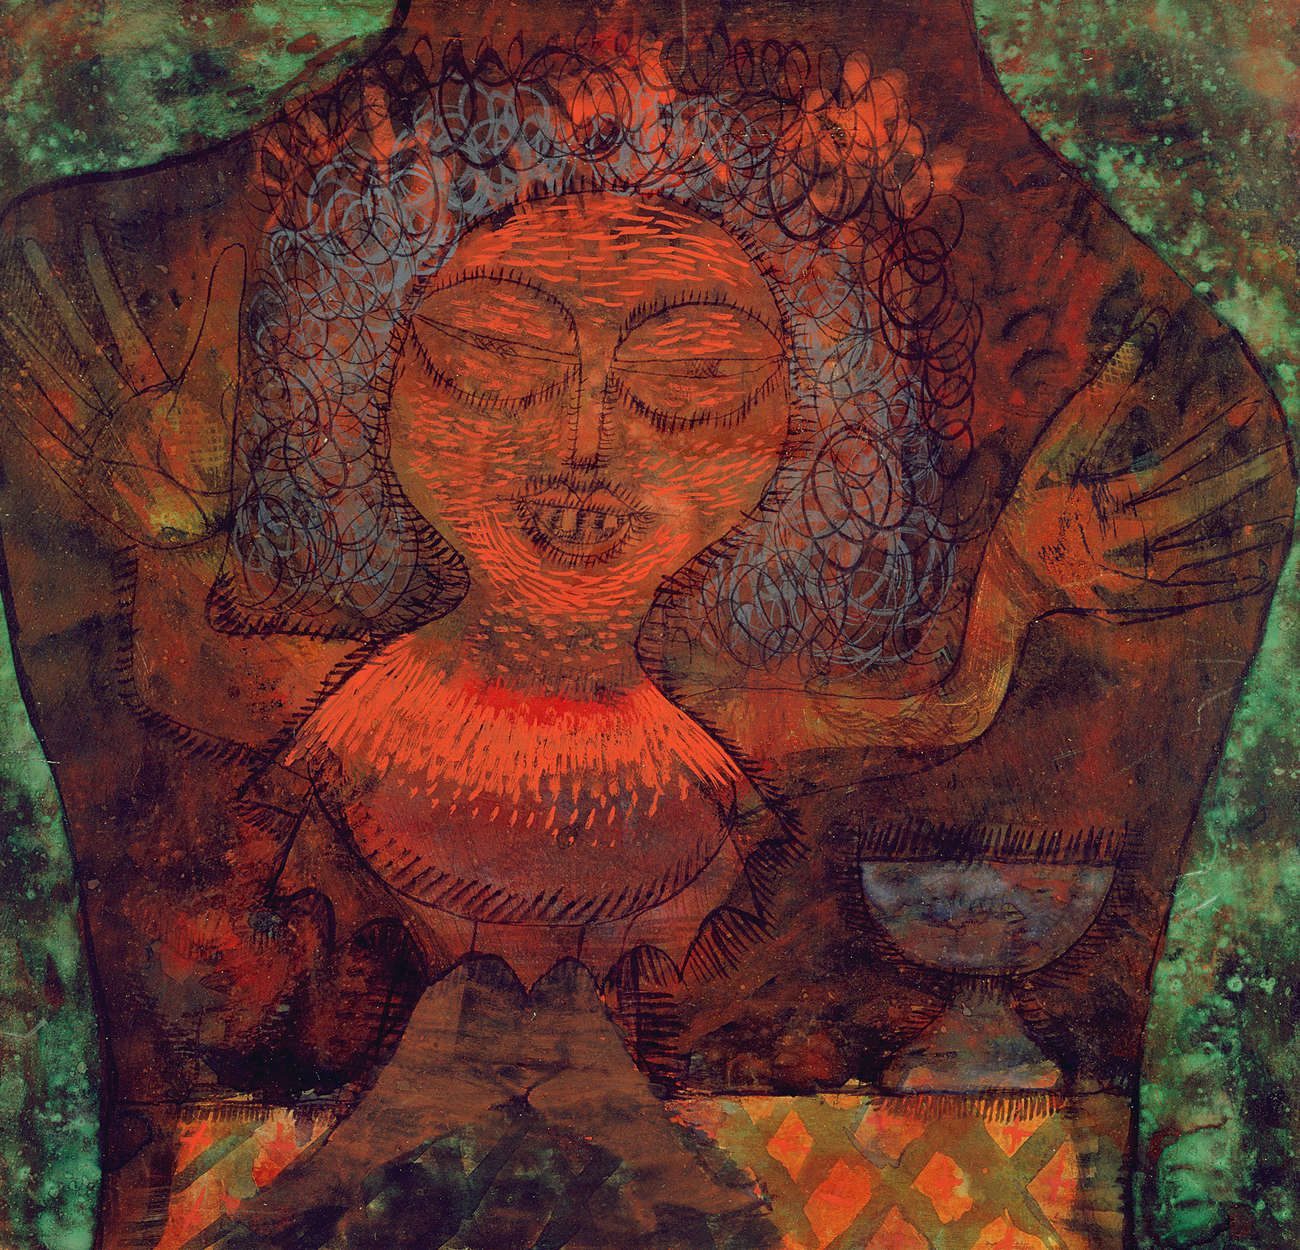             Photo wallpaper "Prophet" by Paul Klee
        